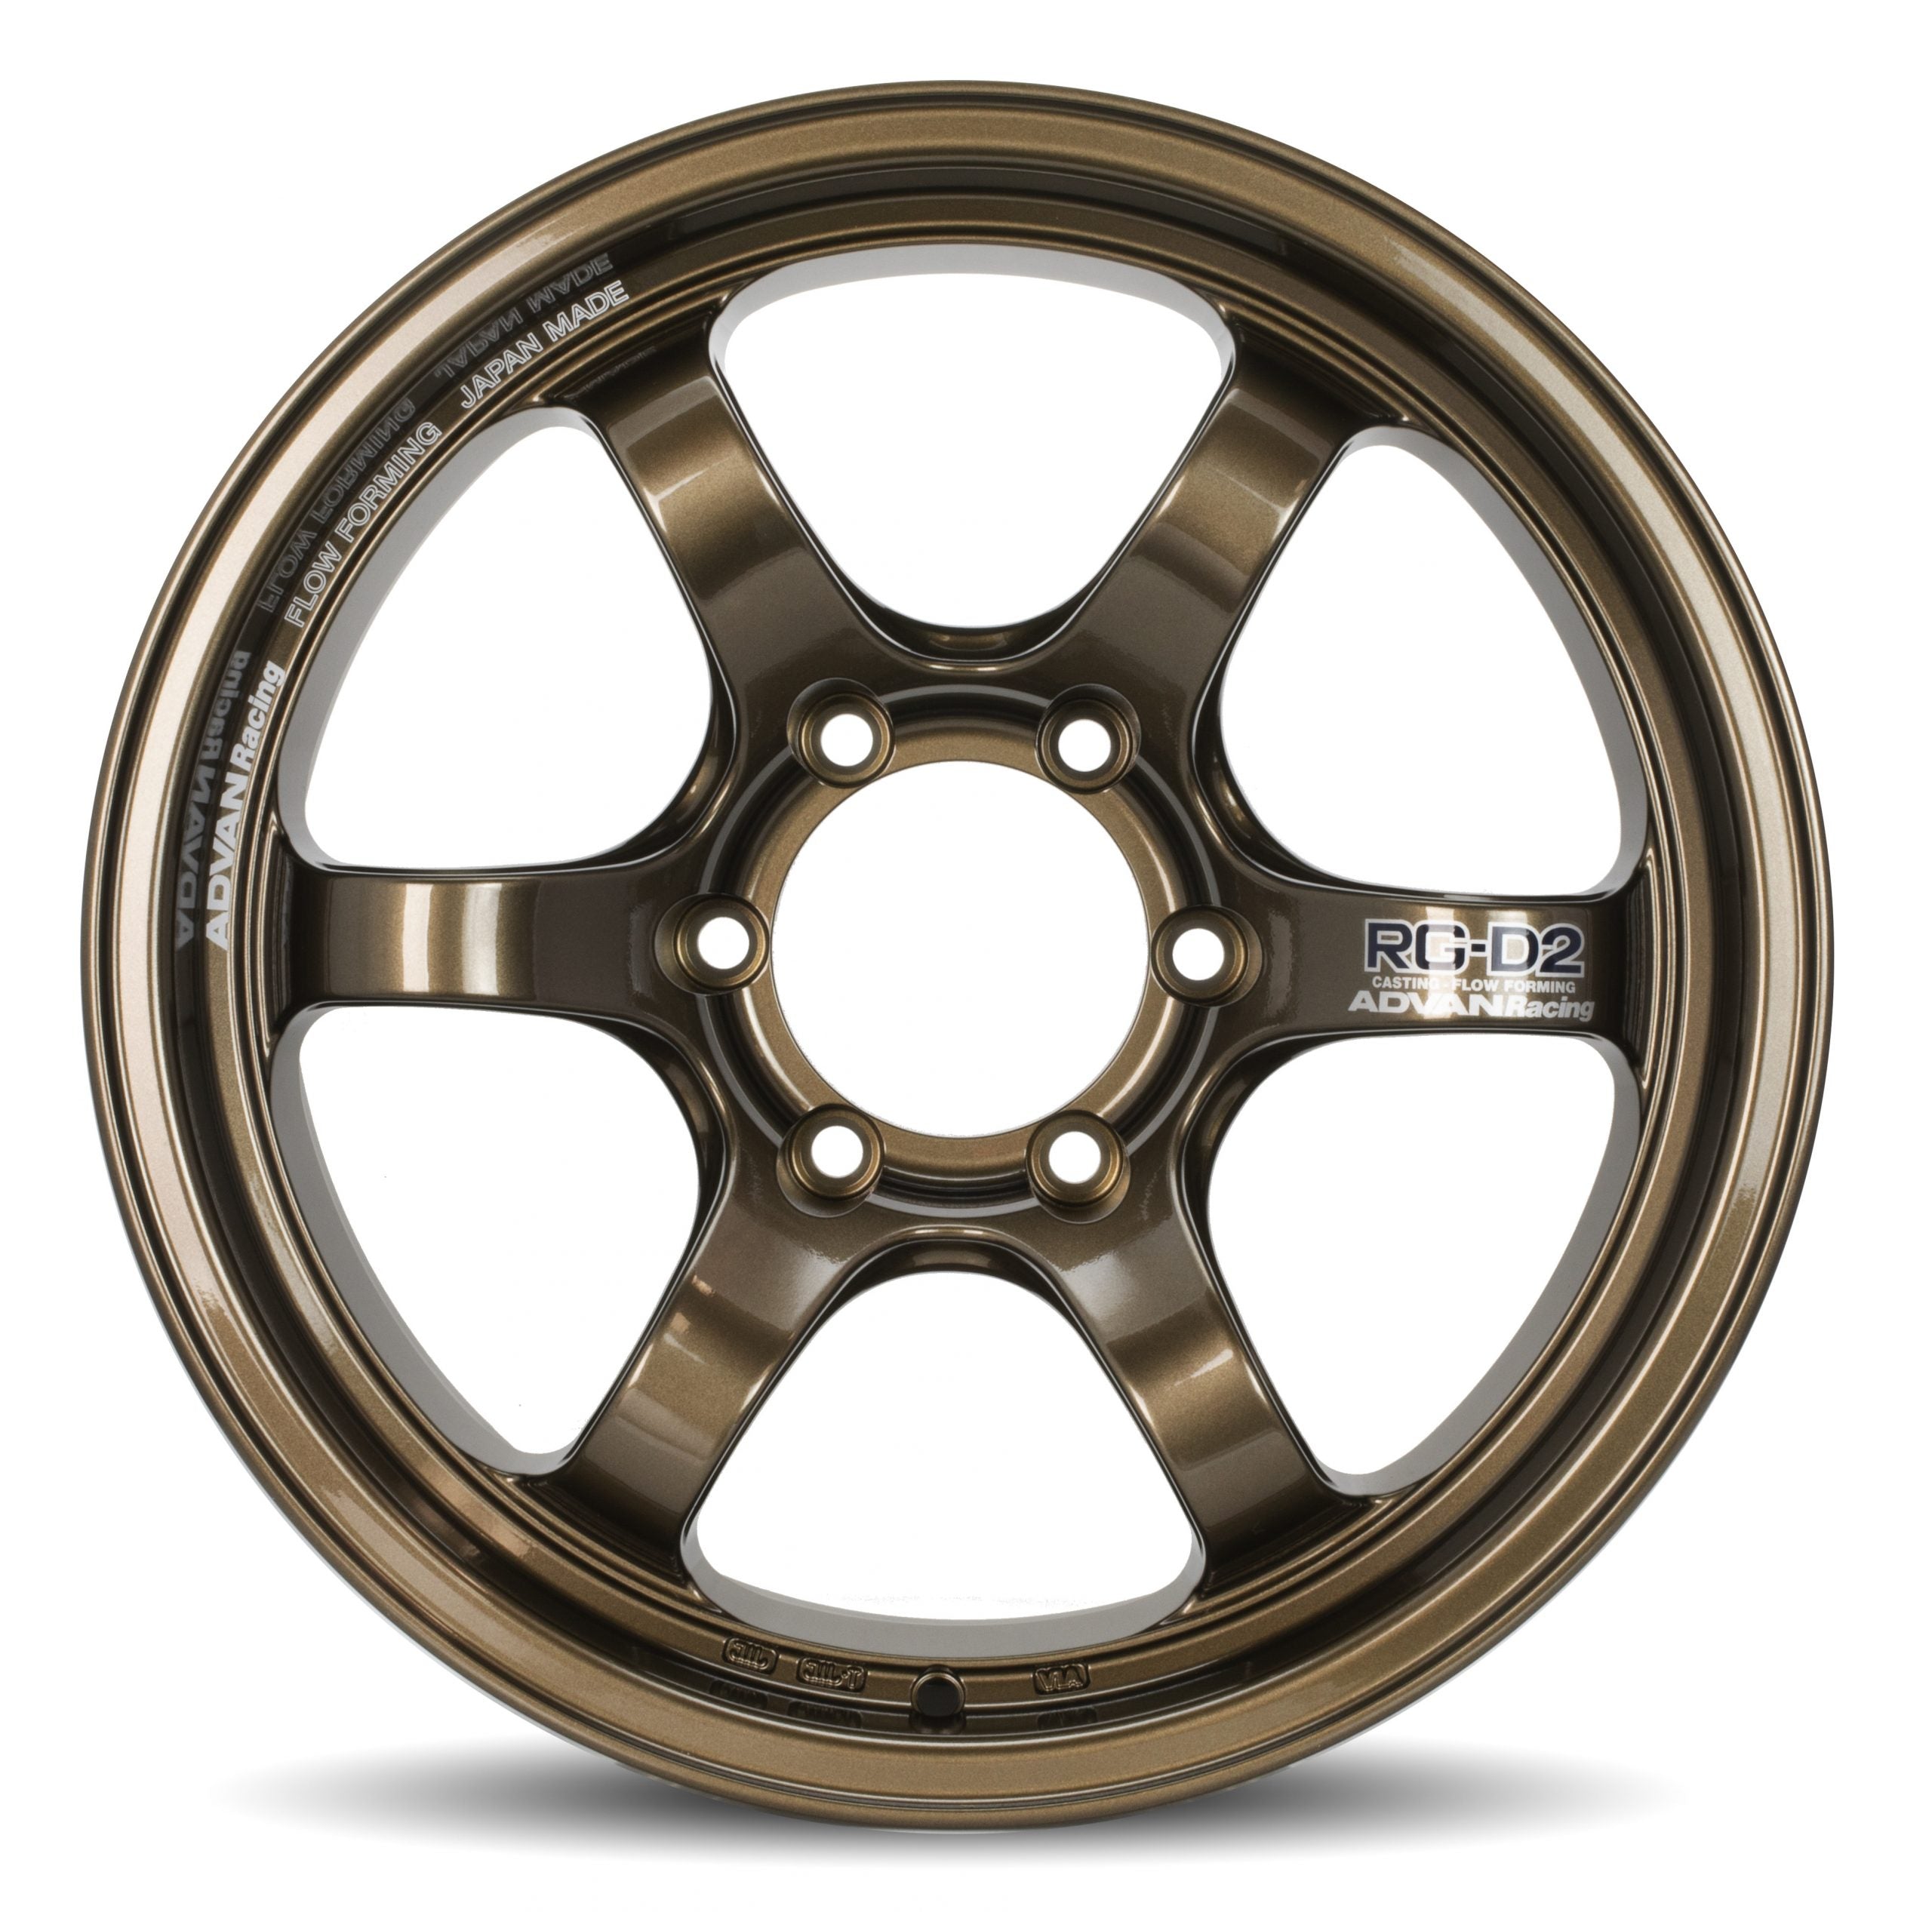 ADVAN YAT7H-10KZ Wheel V4887 RG-D2 for TRUCK 17X8.5 -10 6-139.7 RACING GOLD METALLIC Photo-1 